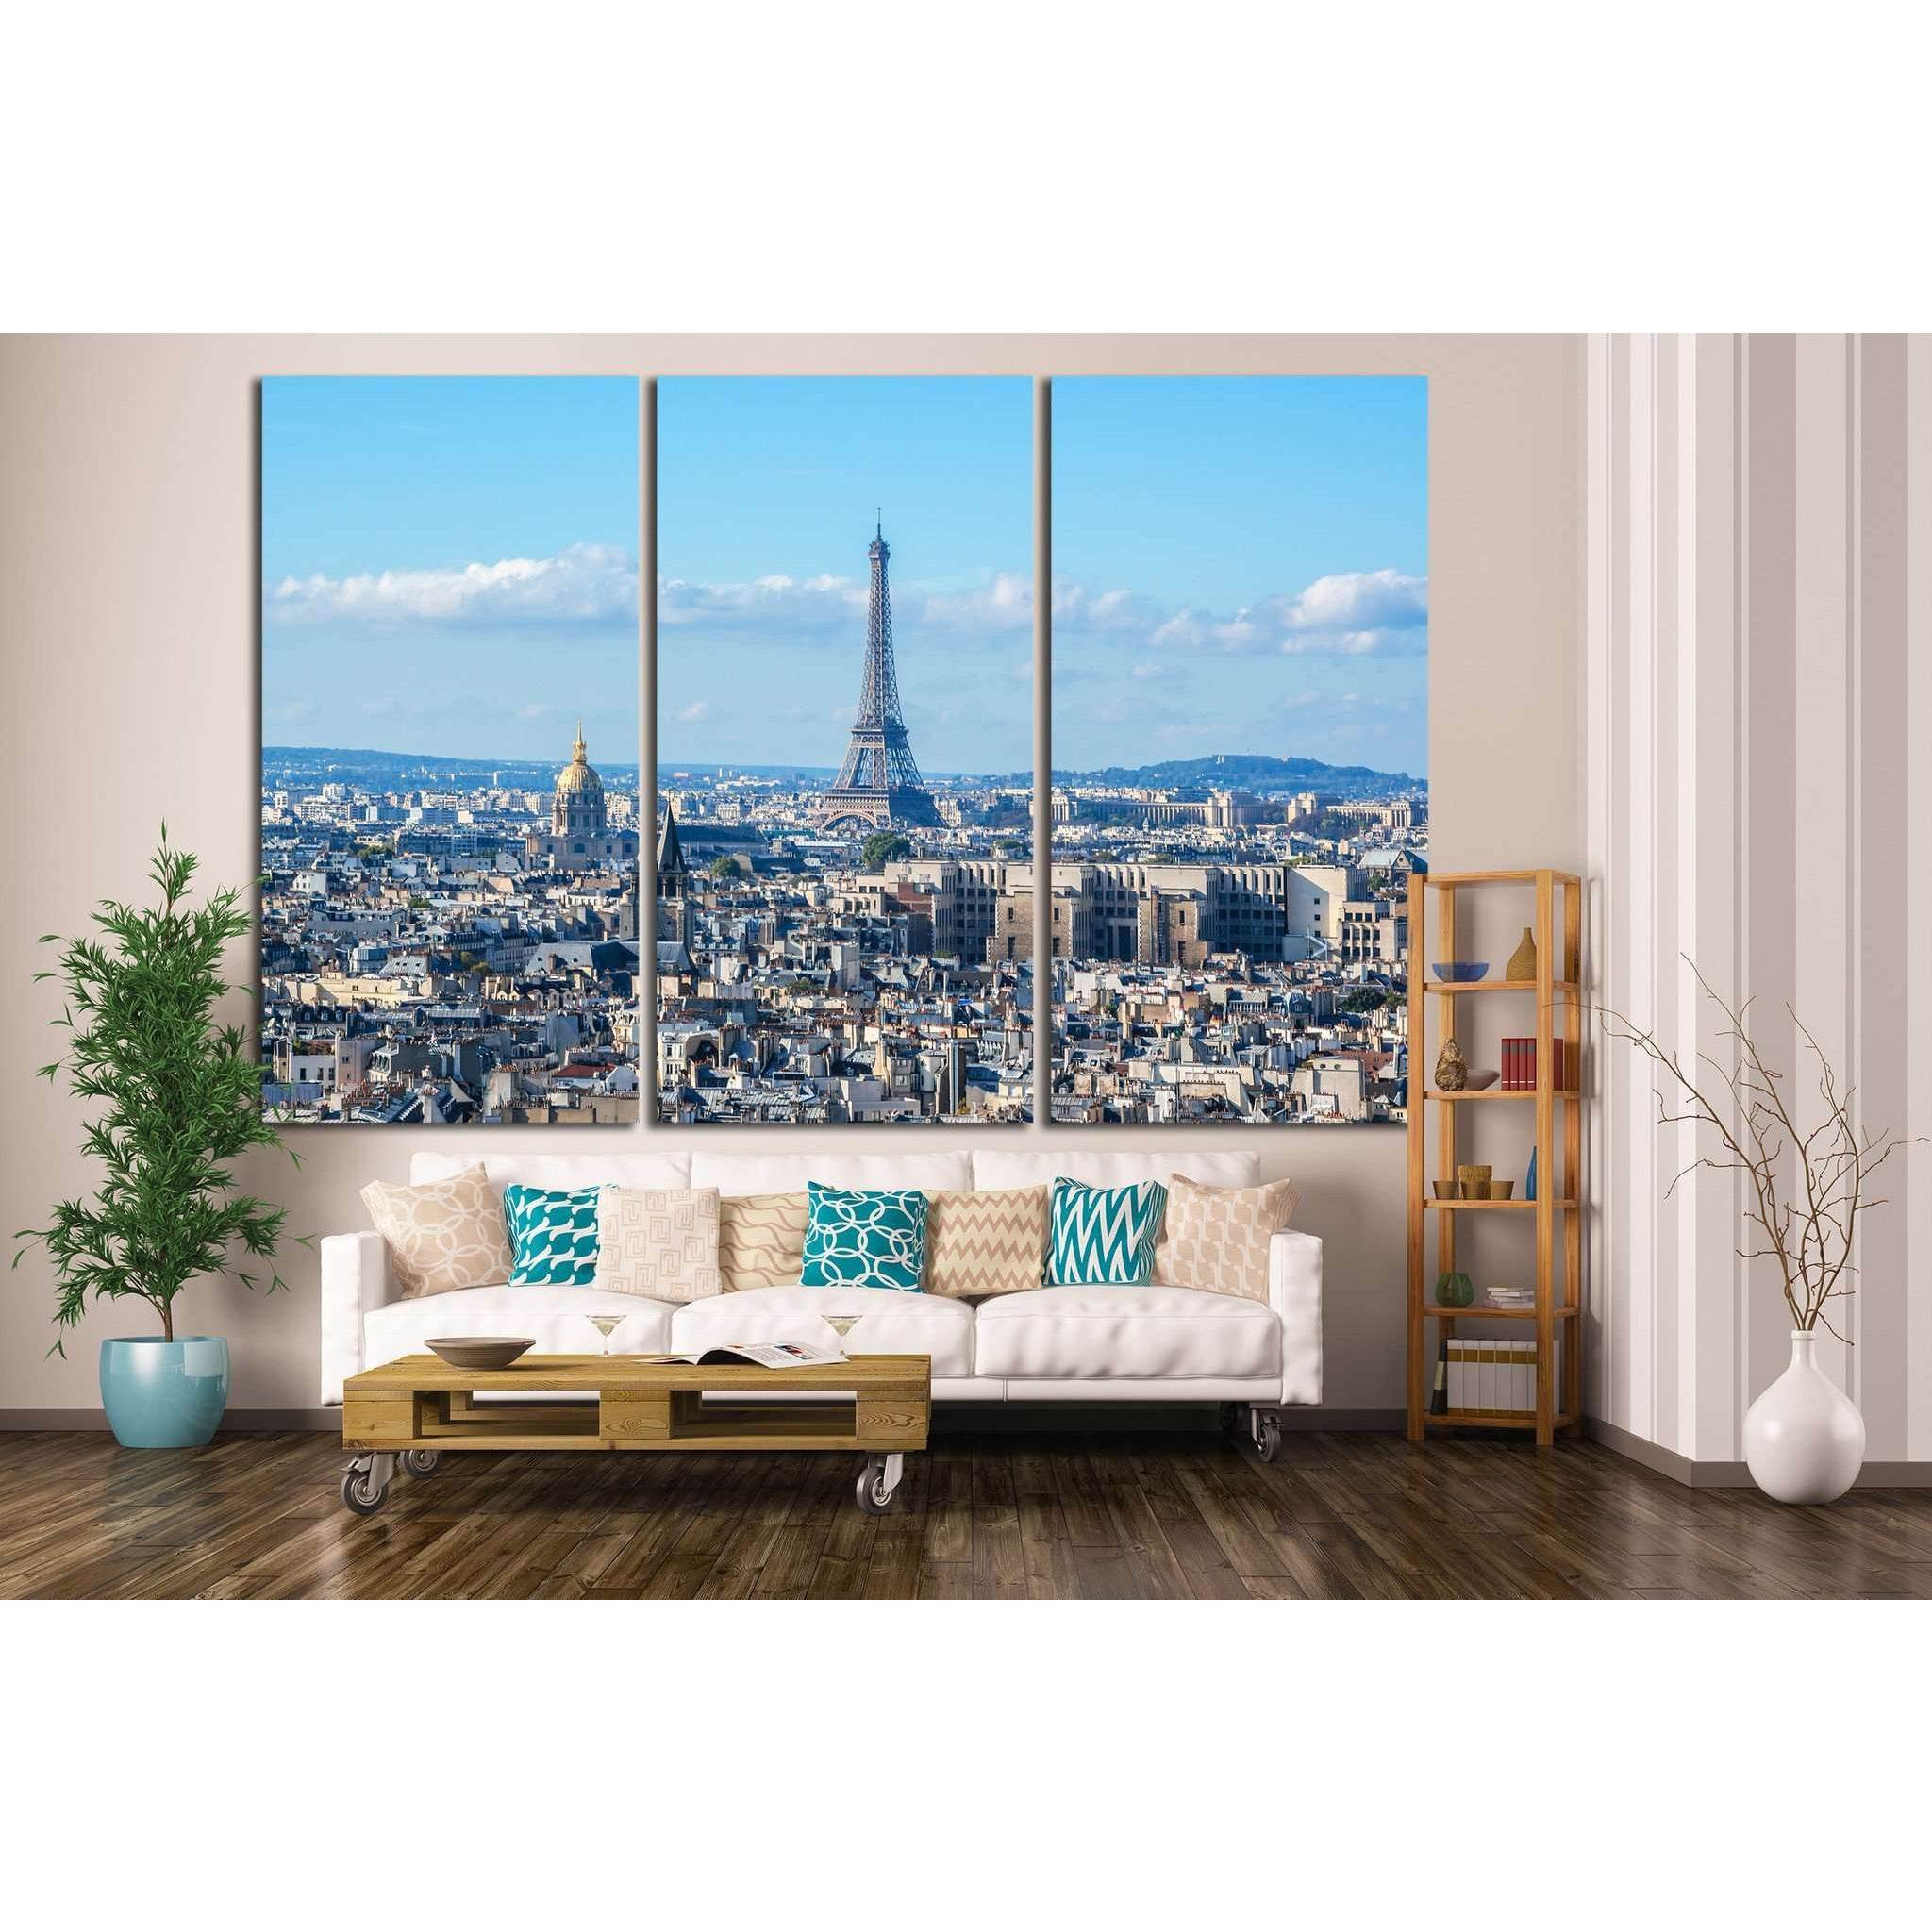 Paris Panorama, Cathedral Notre Dame de Paris, France №1279 Ready to Hang Canvas Print